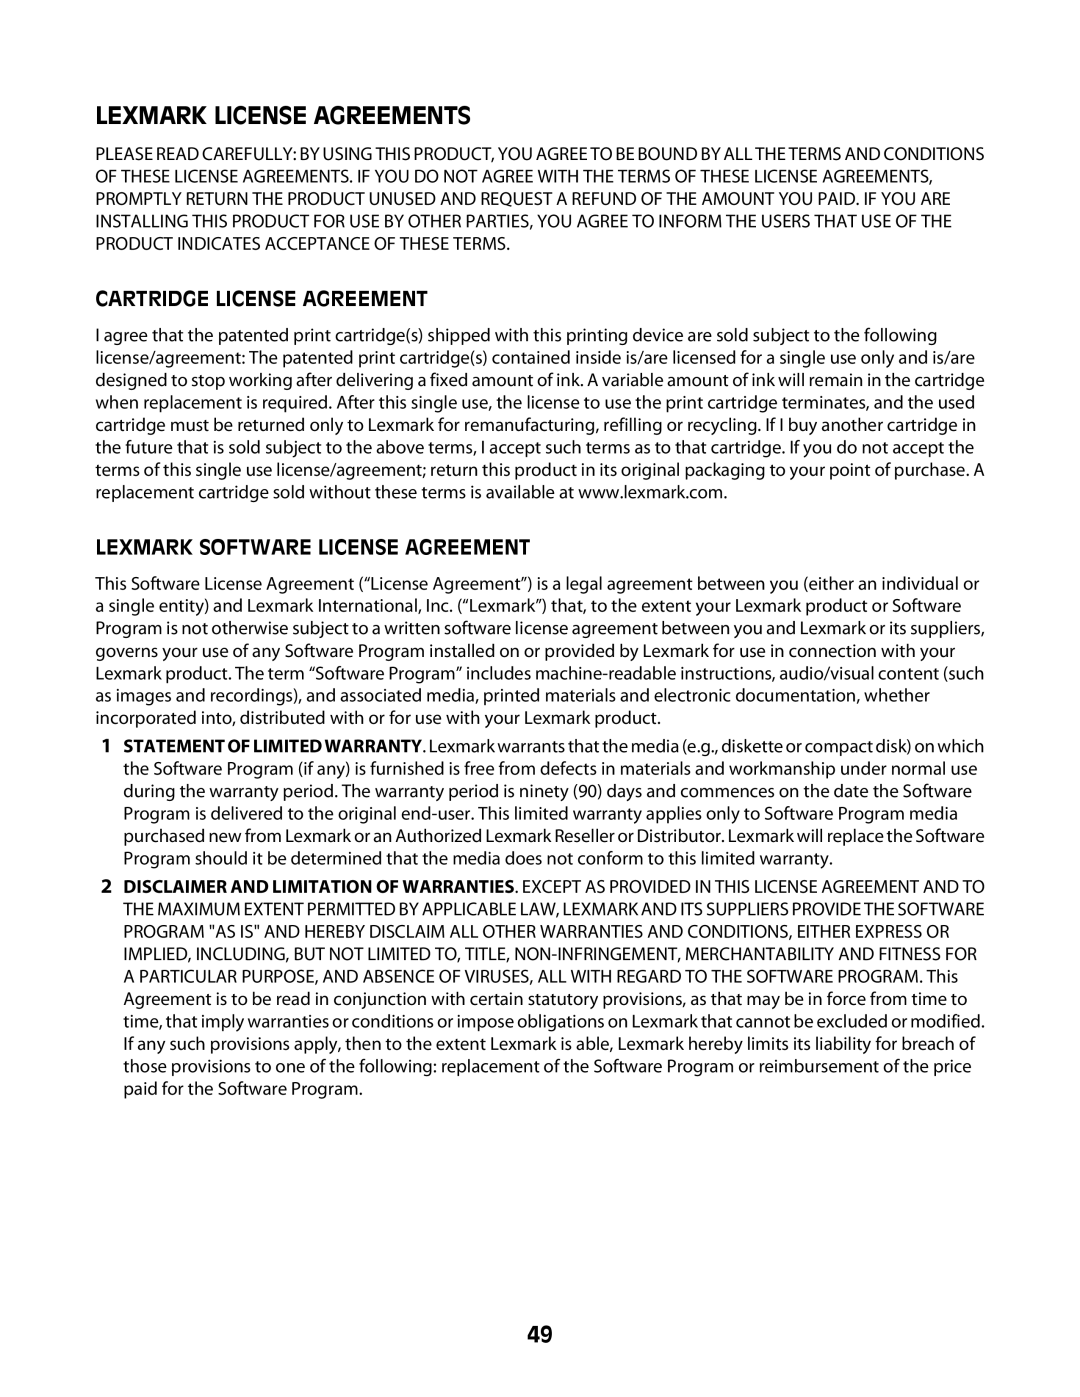 Lexmark Z2300 manual Lexmark License Agreements, Cartridge License Agreement, Lexmark Software License Agreement 